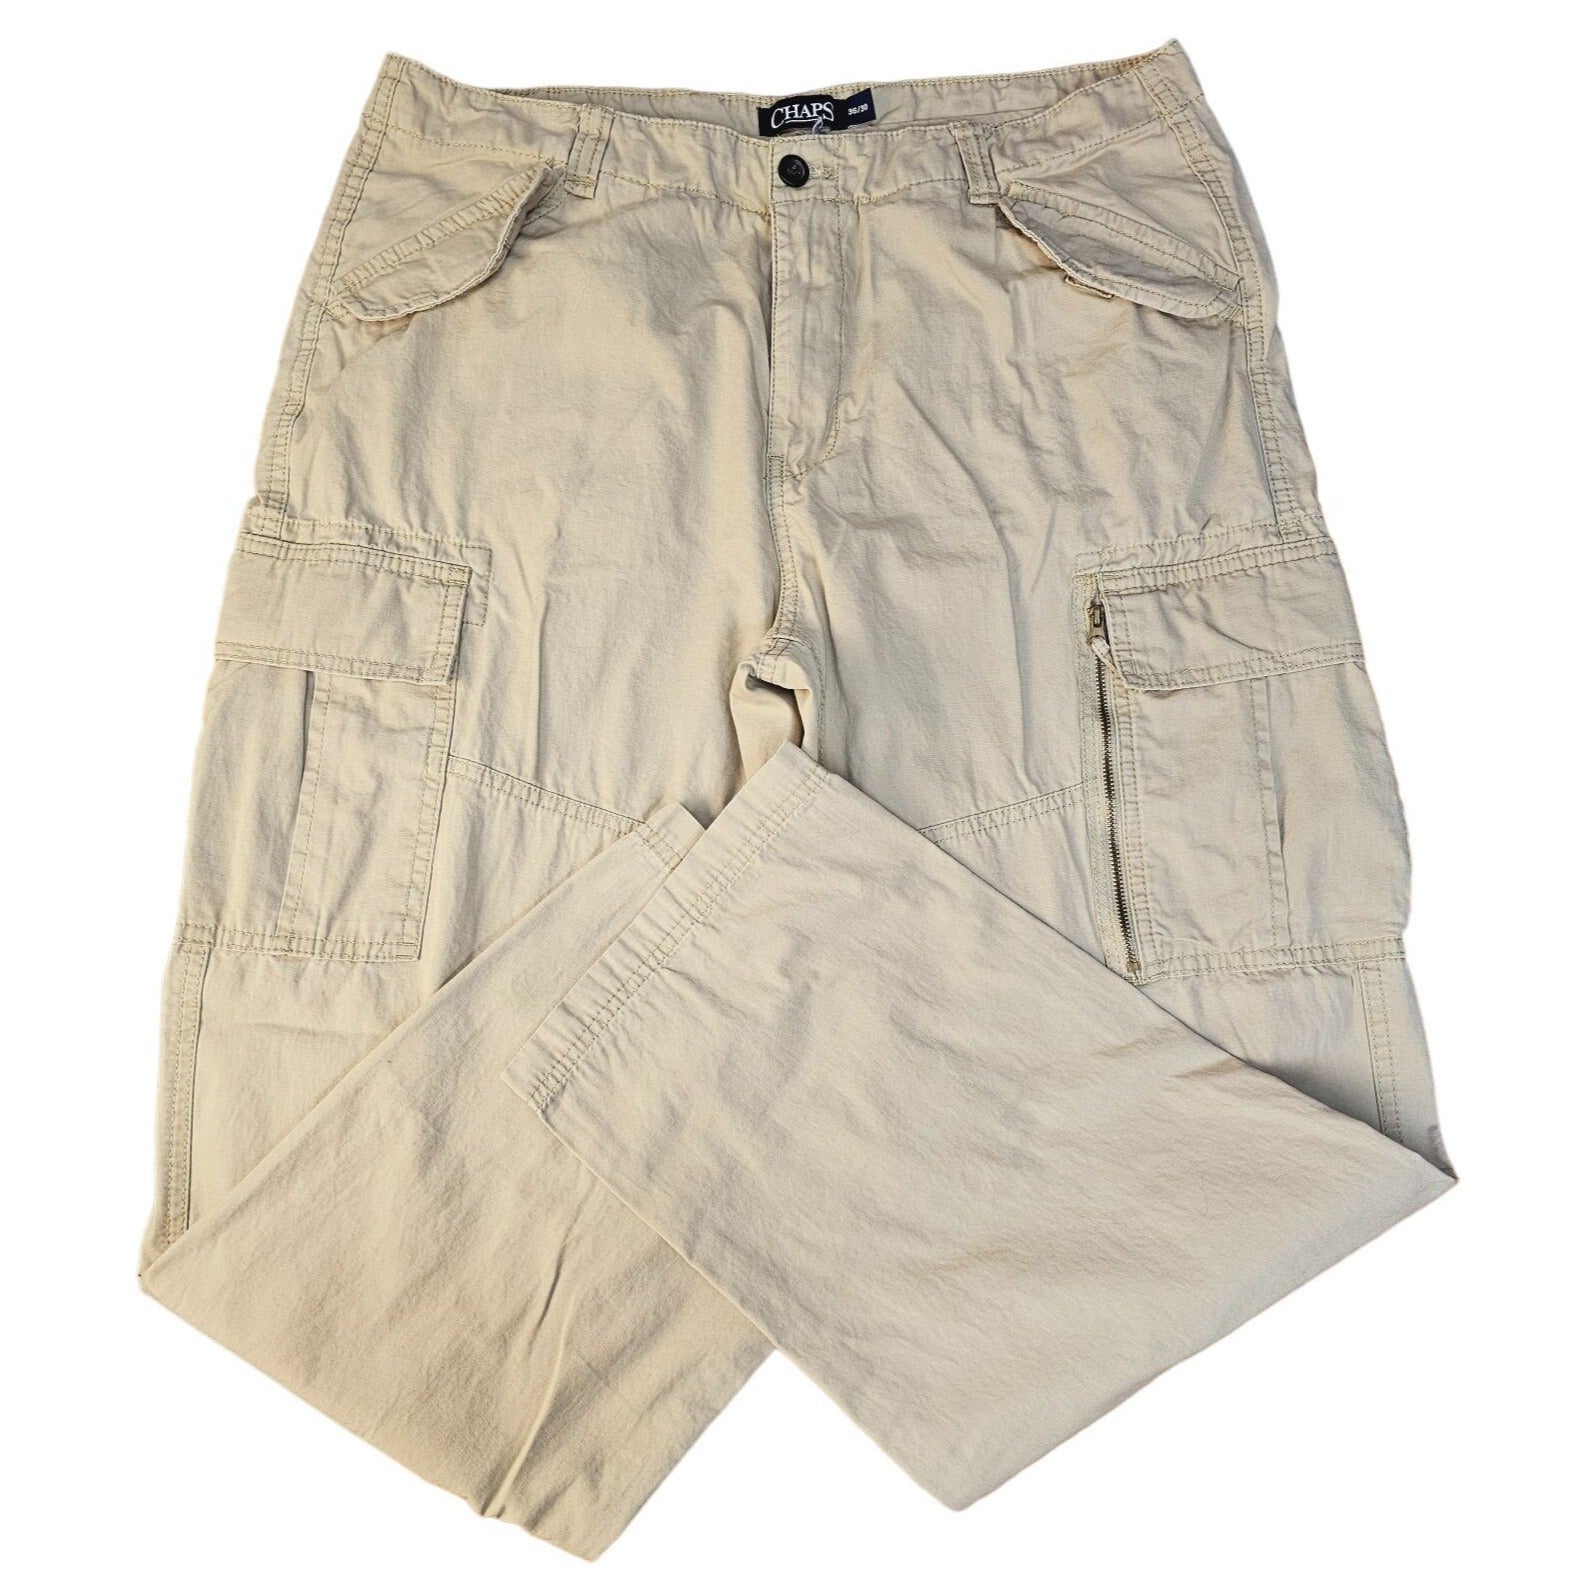 Chaps Lightweight Dress Cargo Cotton Outdoor Tan Khaki Pants Size 36 x 30